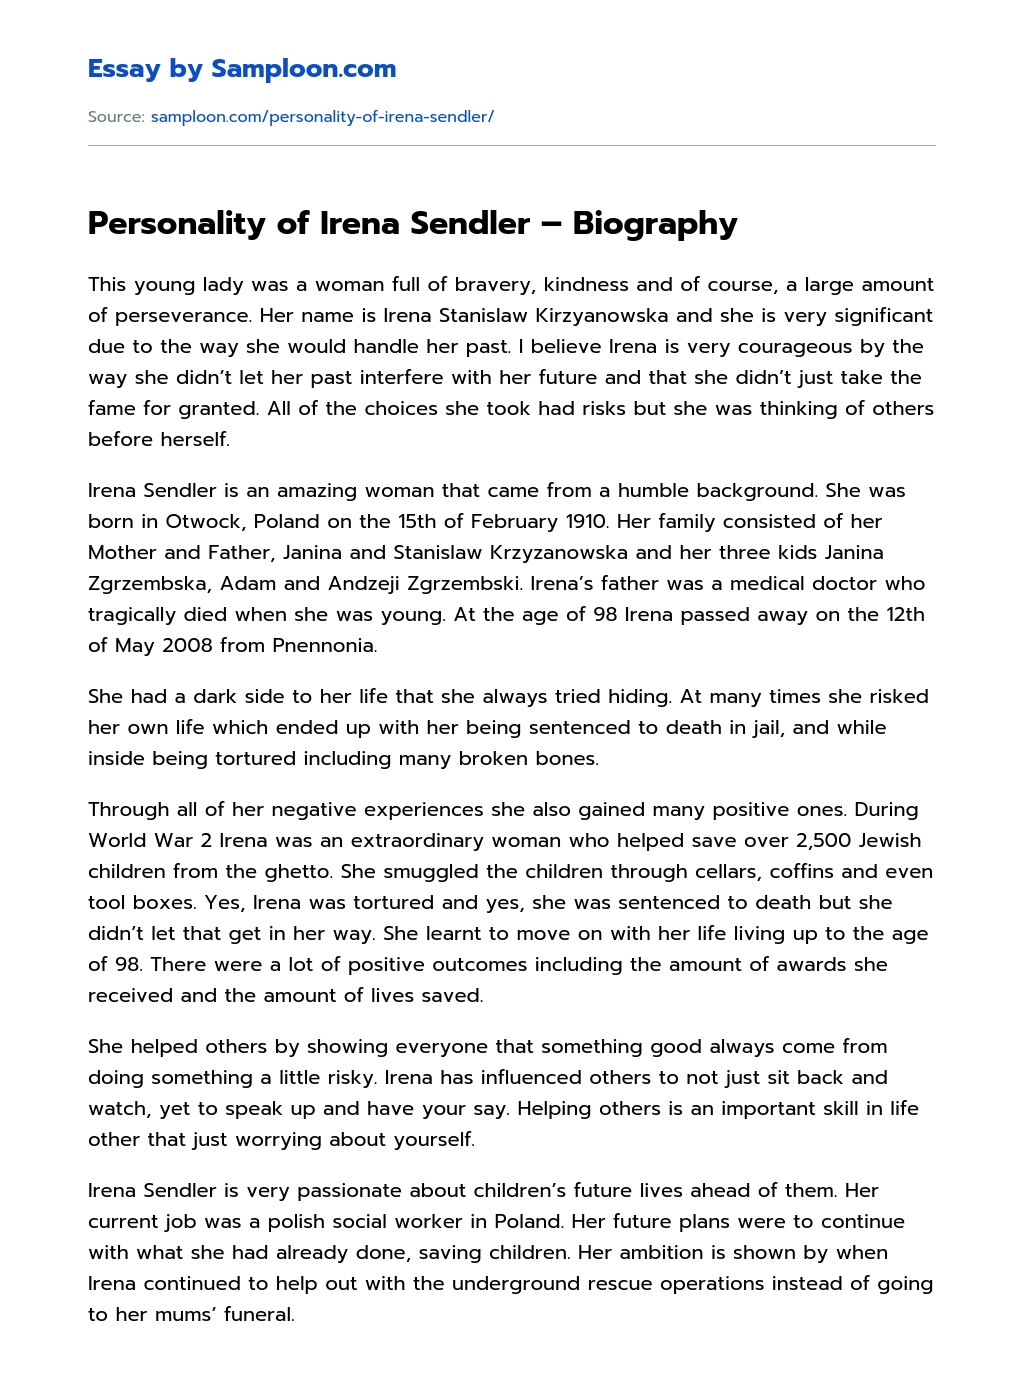 Personality of Irena Sendler – Biography essay